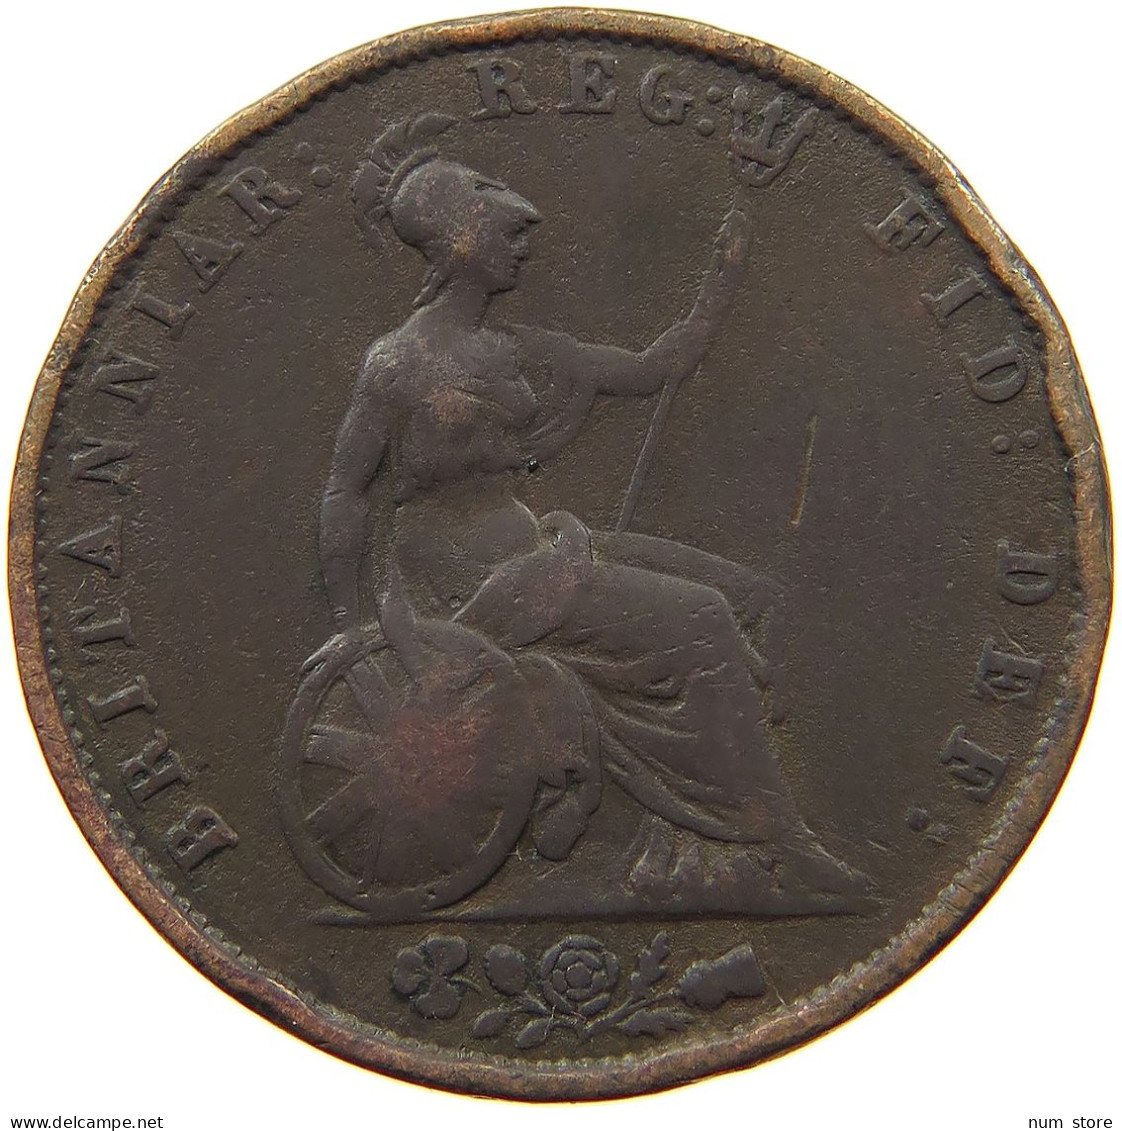 GREAT BRITAIN HALFPENNY 1854 Victoria 1837-1901 #a009 0085 - C. 1/2 Penny